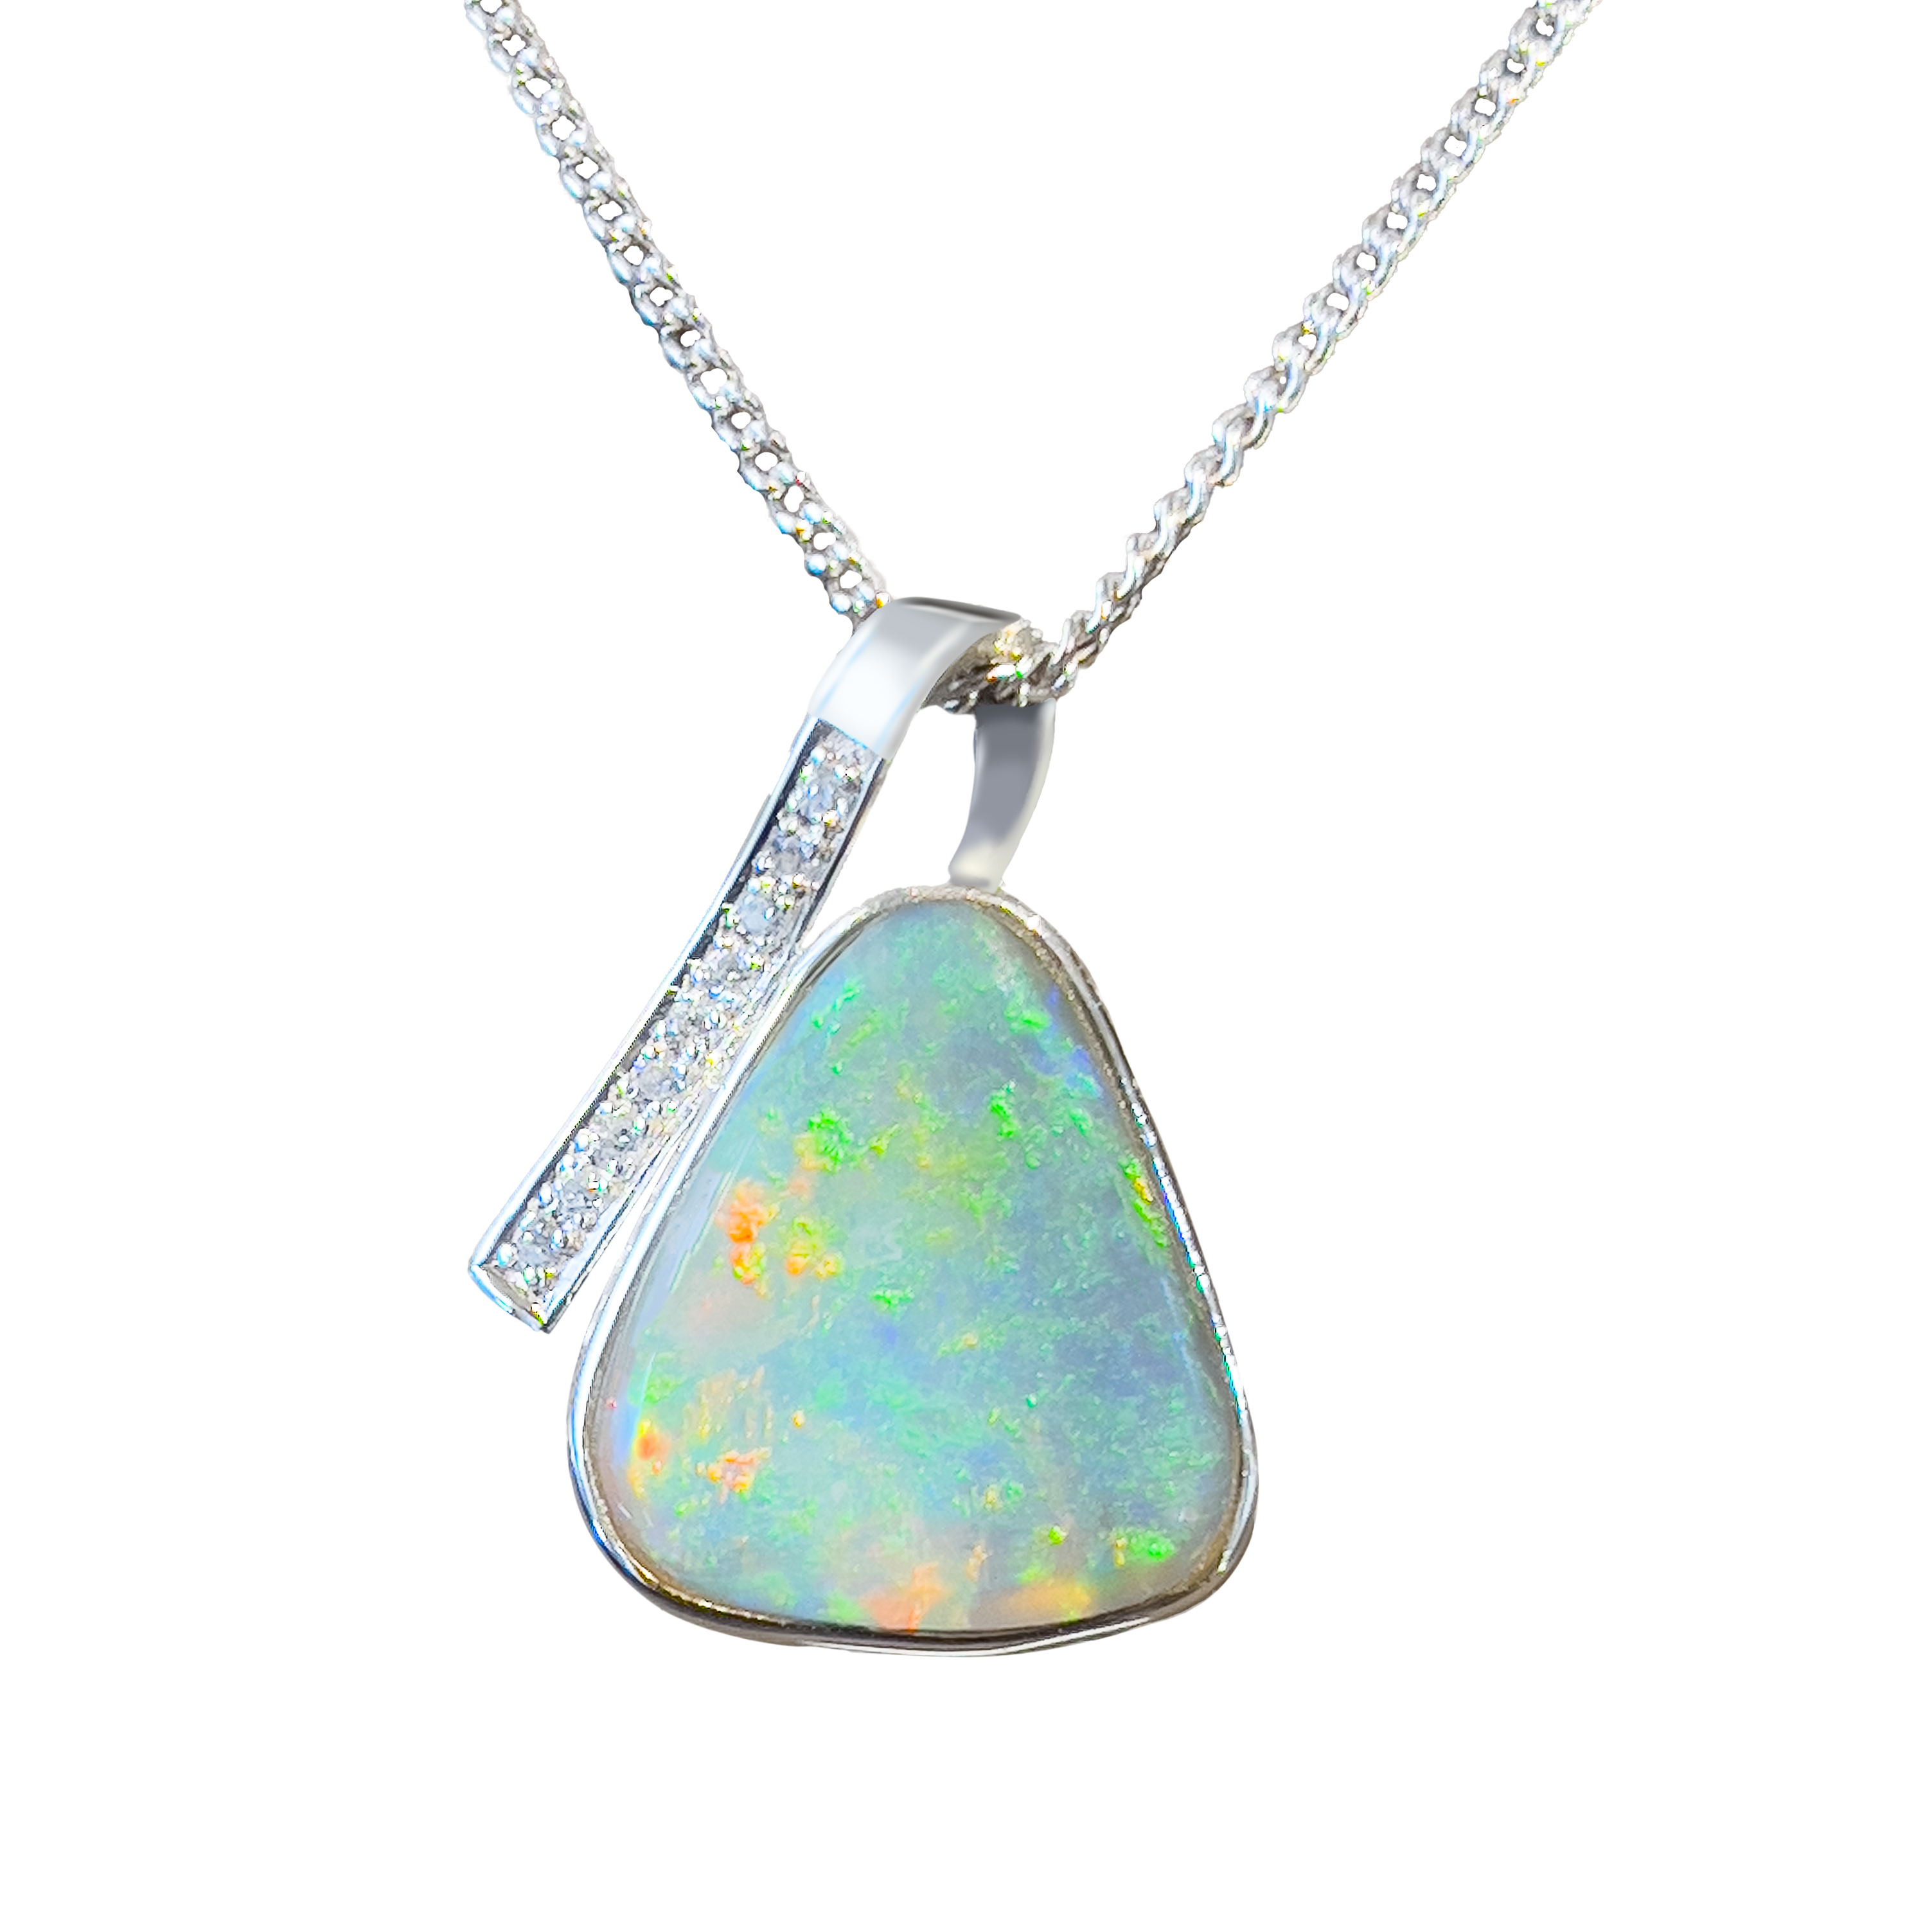 Sterling Silver Crystal Opal pendant with cubic zirconias triangular shape - Masterpiece Jewellery Opal & Gems Sydney Australia | Online Shop